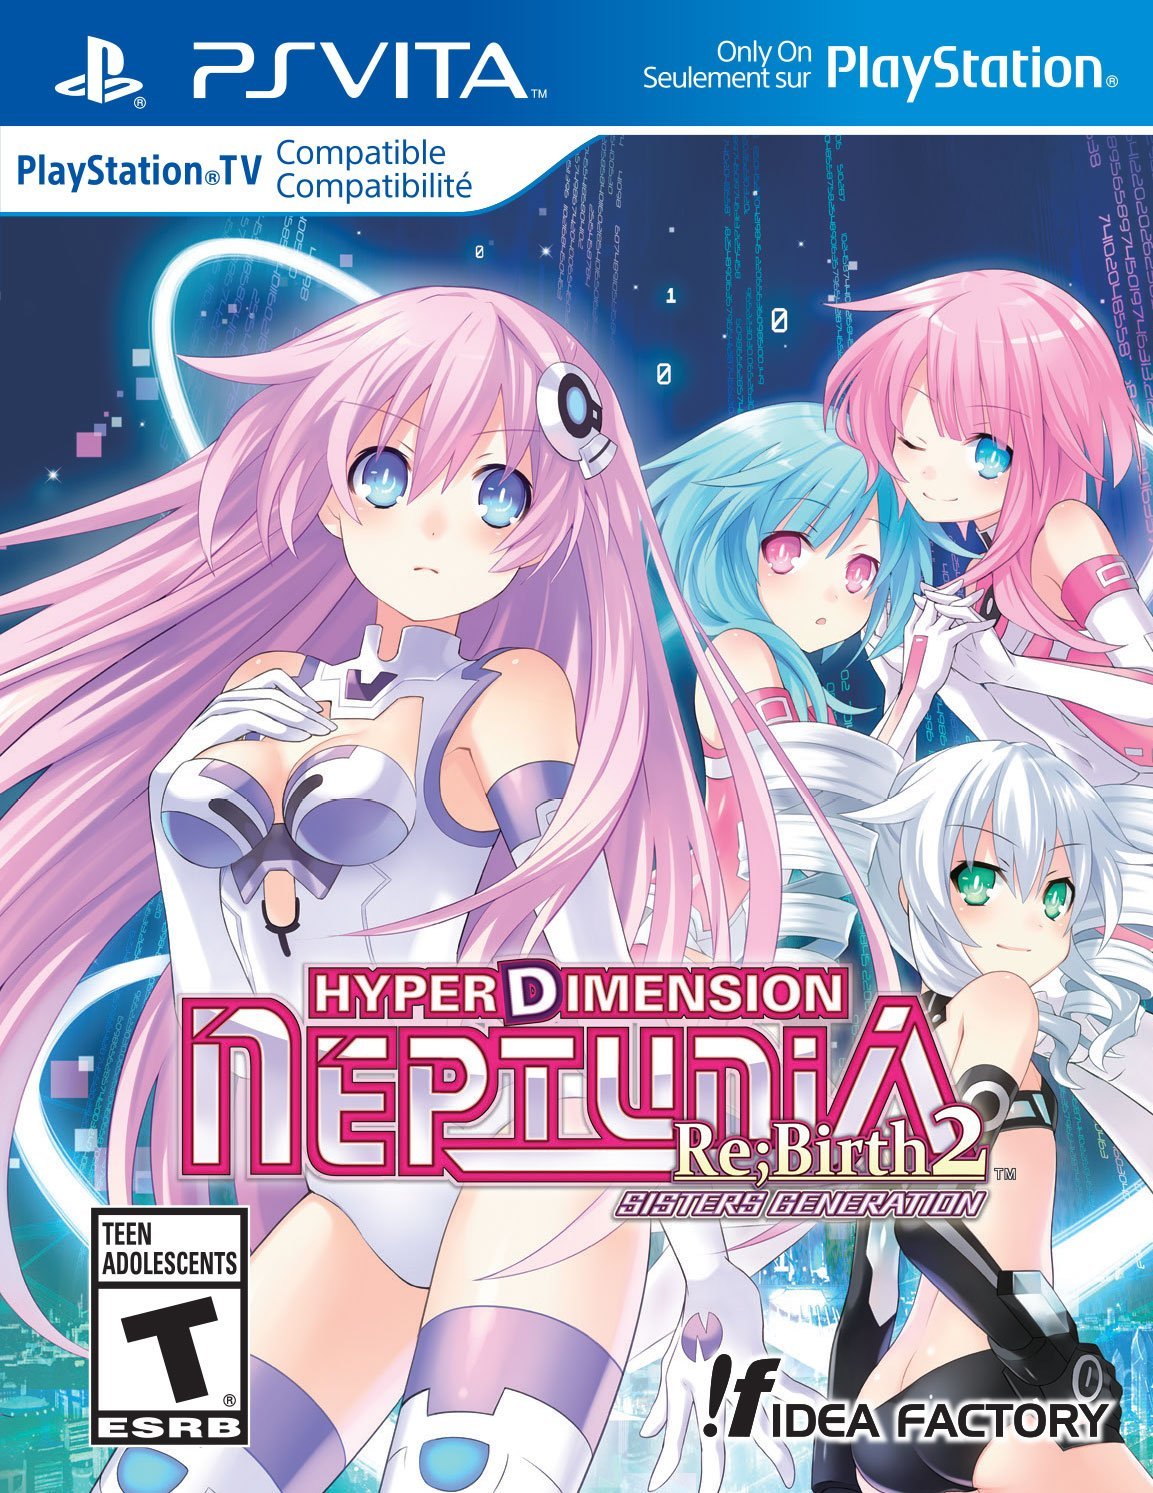 Hyperdimension Neptunia Re;Birth2 Sisters Generation #21